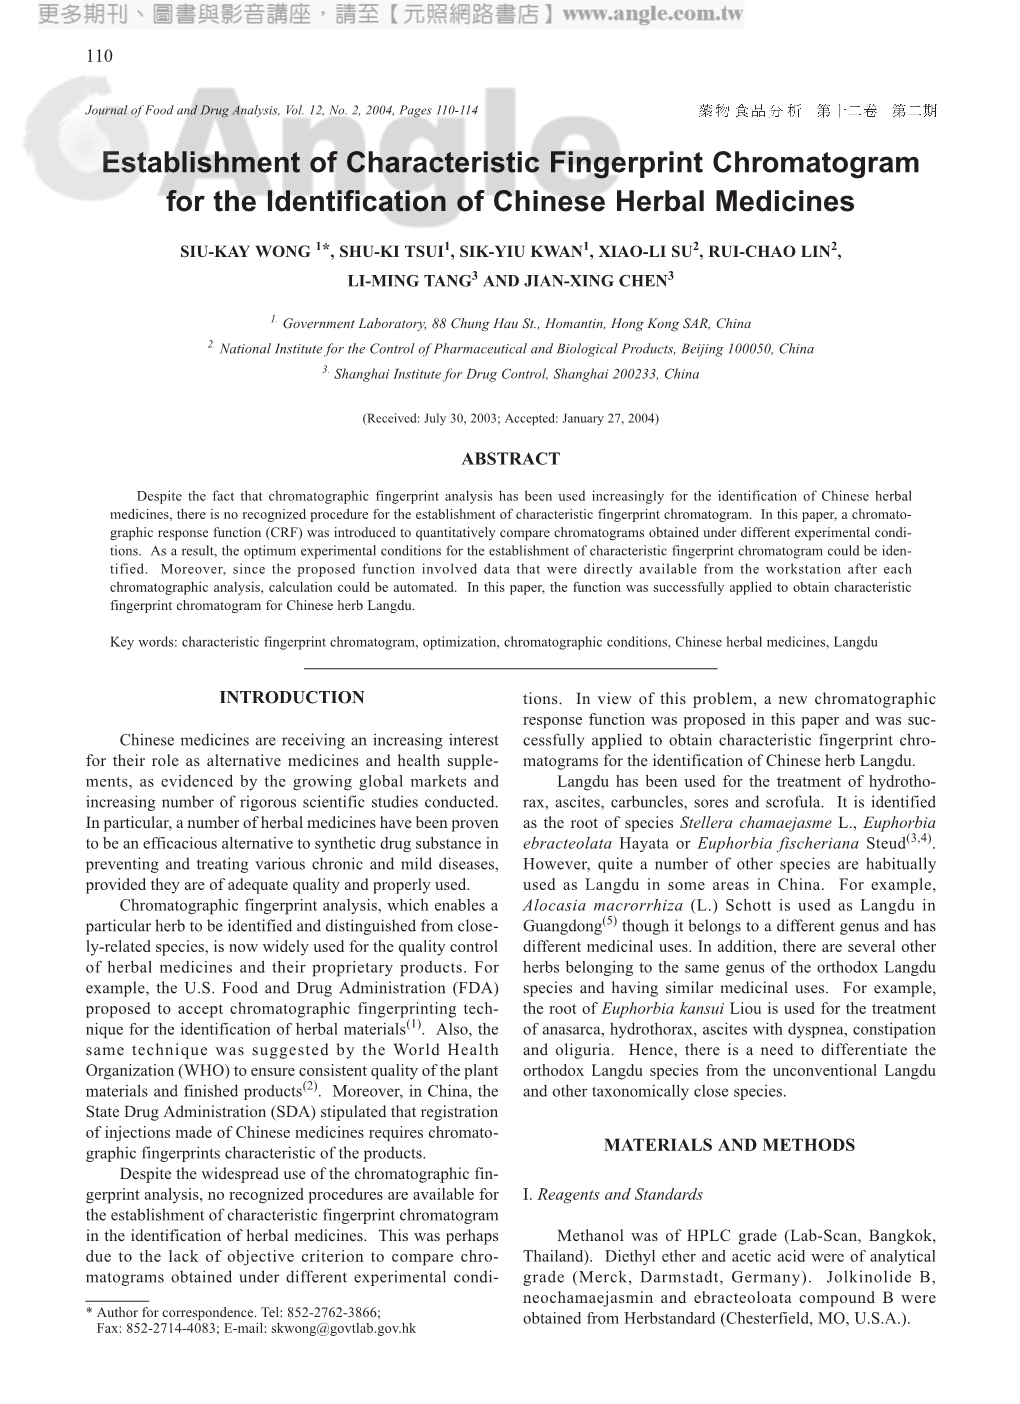 Establishment of Characteristic Fingerprint Chromatogram for the Identification of Chinese Herbal Medicines